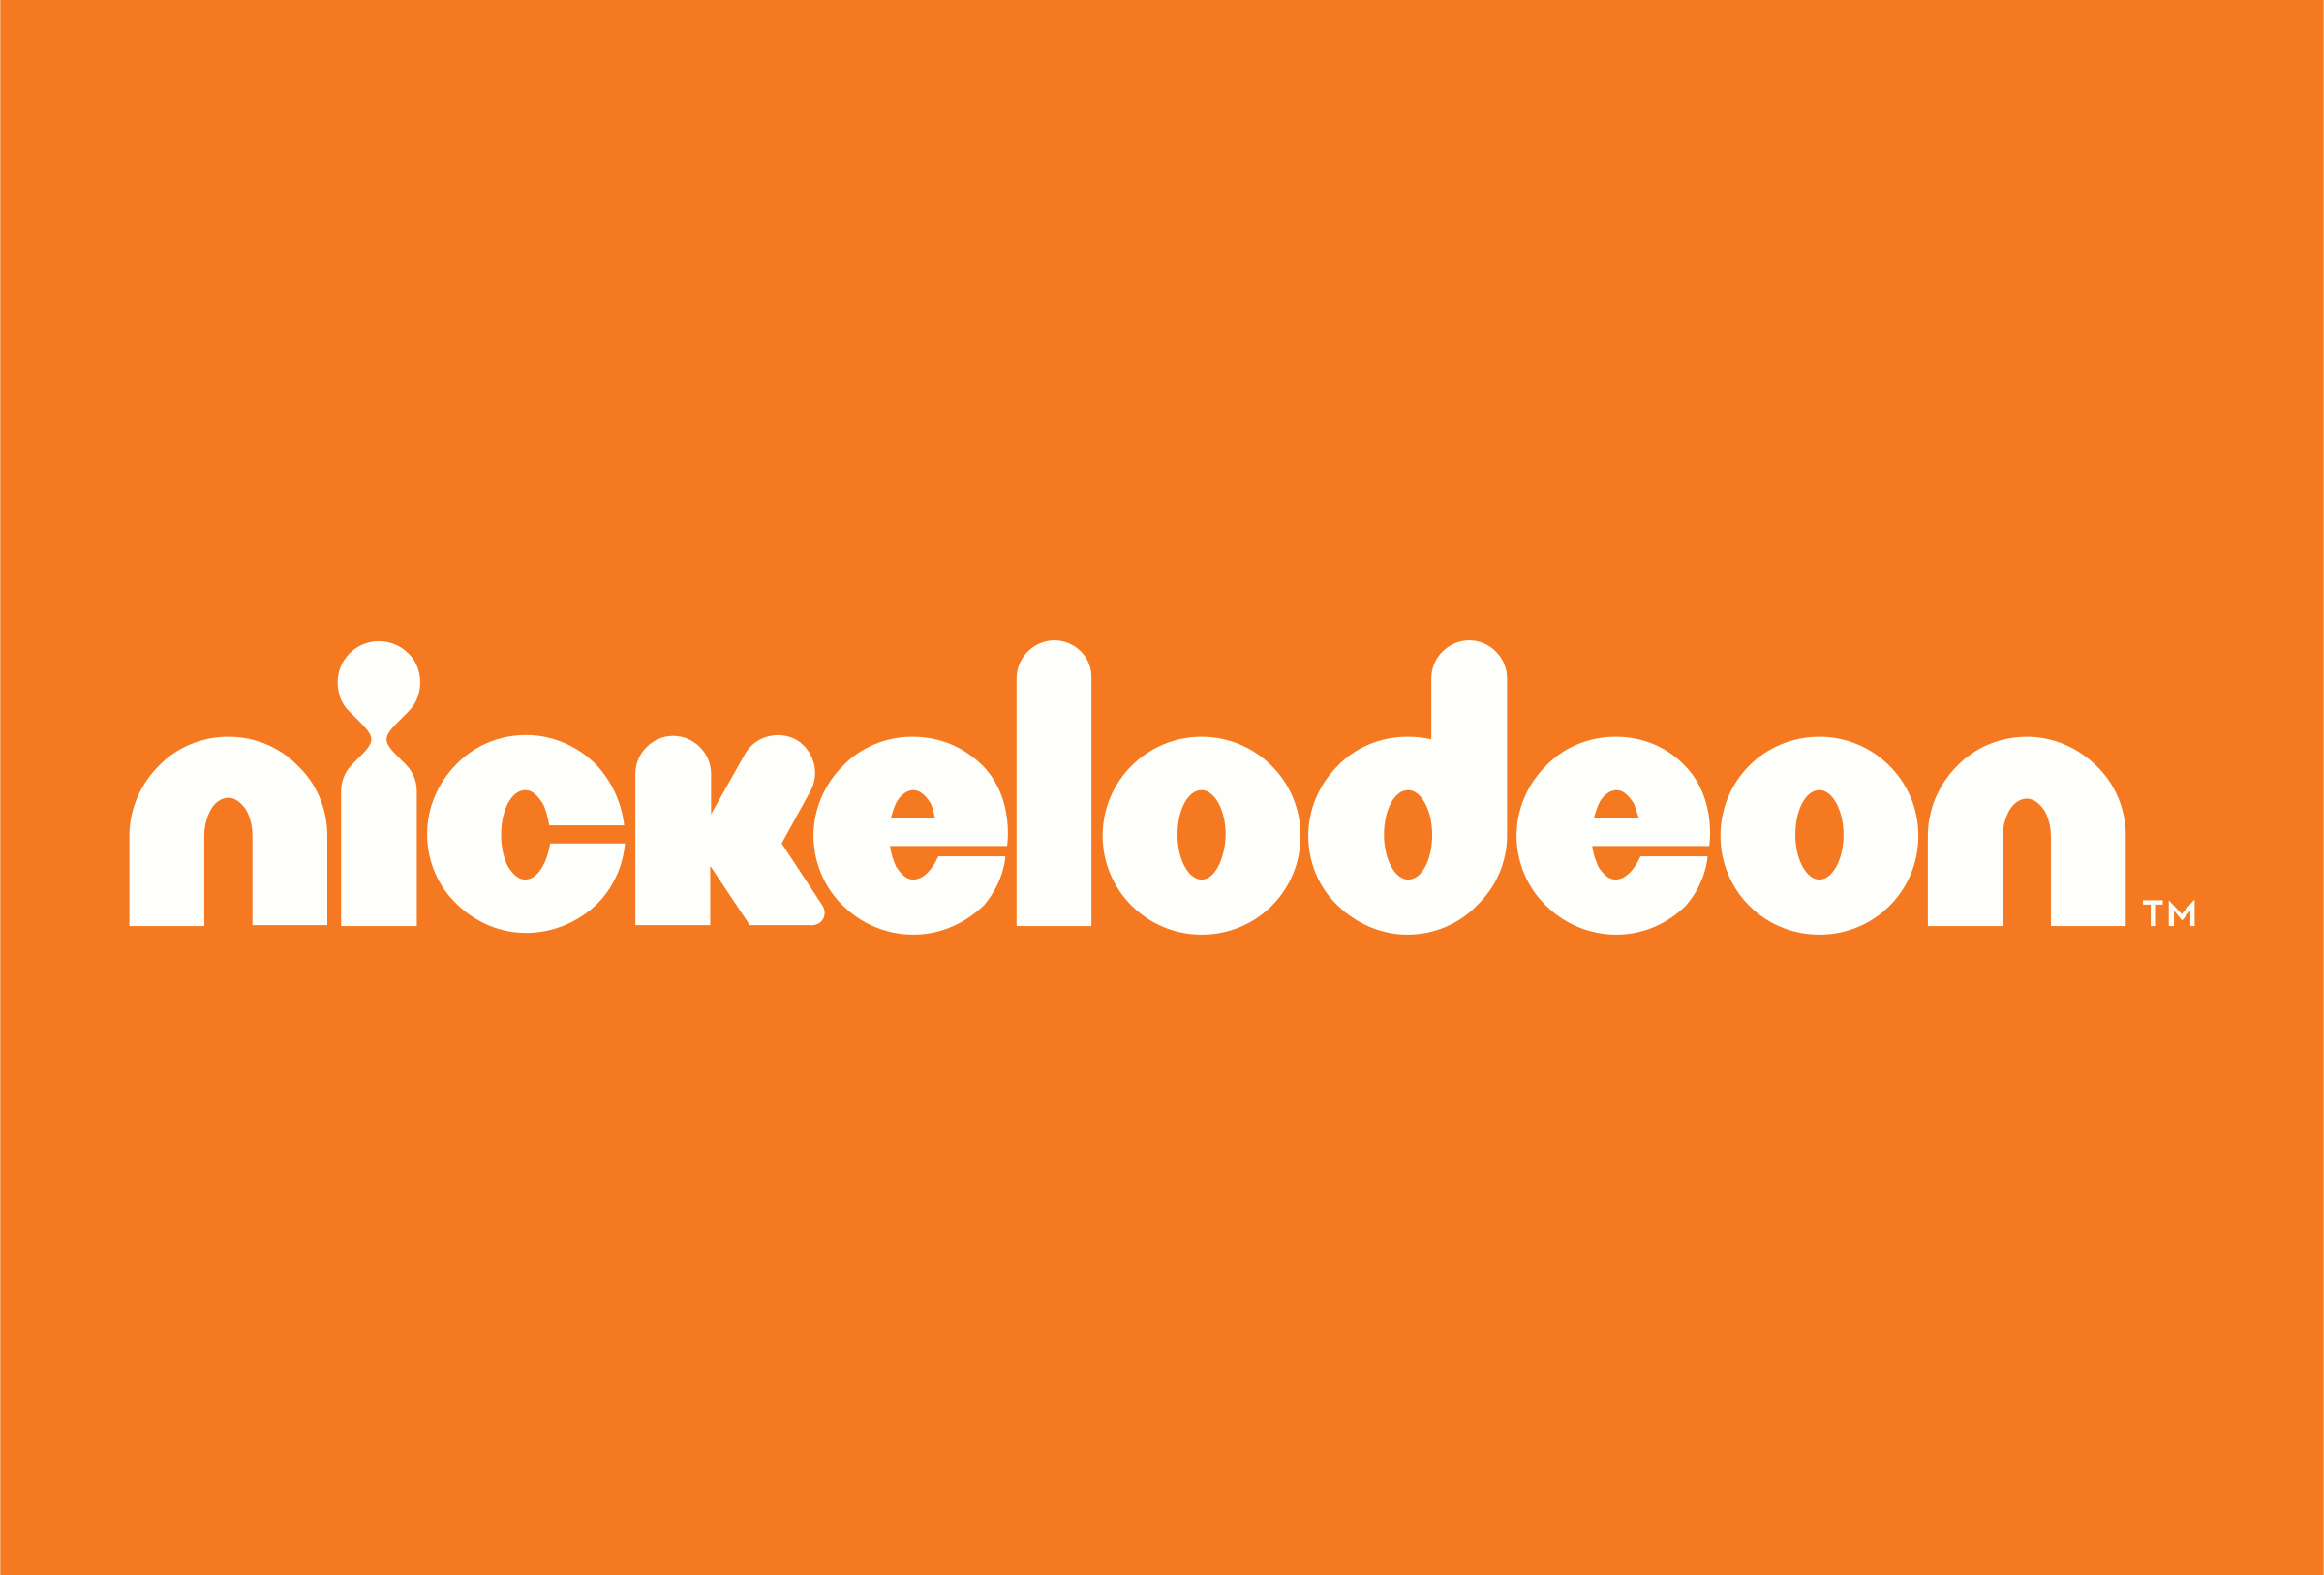 Nickelodean Logo - Nickelodeon Logo PNG Transparent & SVG Vector - Freebie Supply